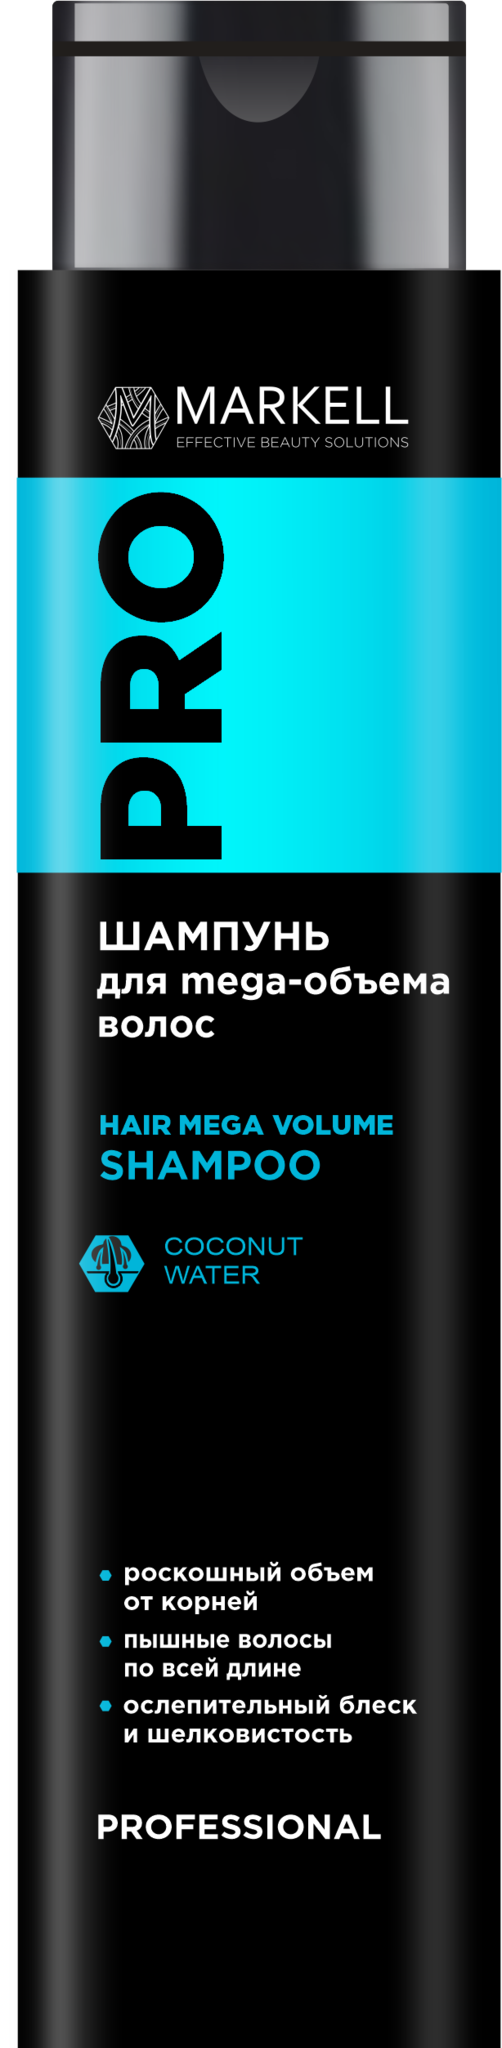 MARKELL Professional Hair Mega Volume Шампунь для MEGA-объёма волос 400мл